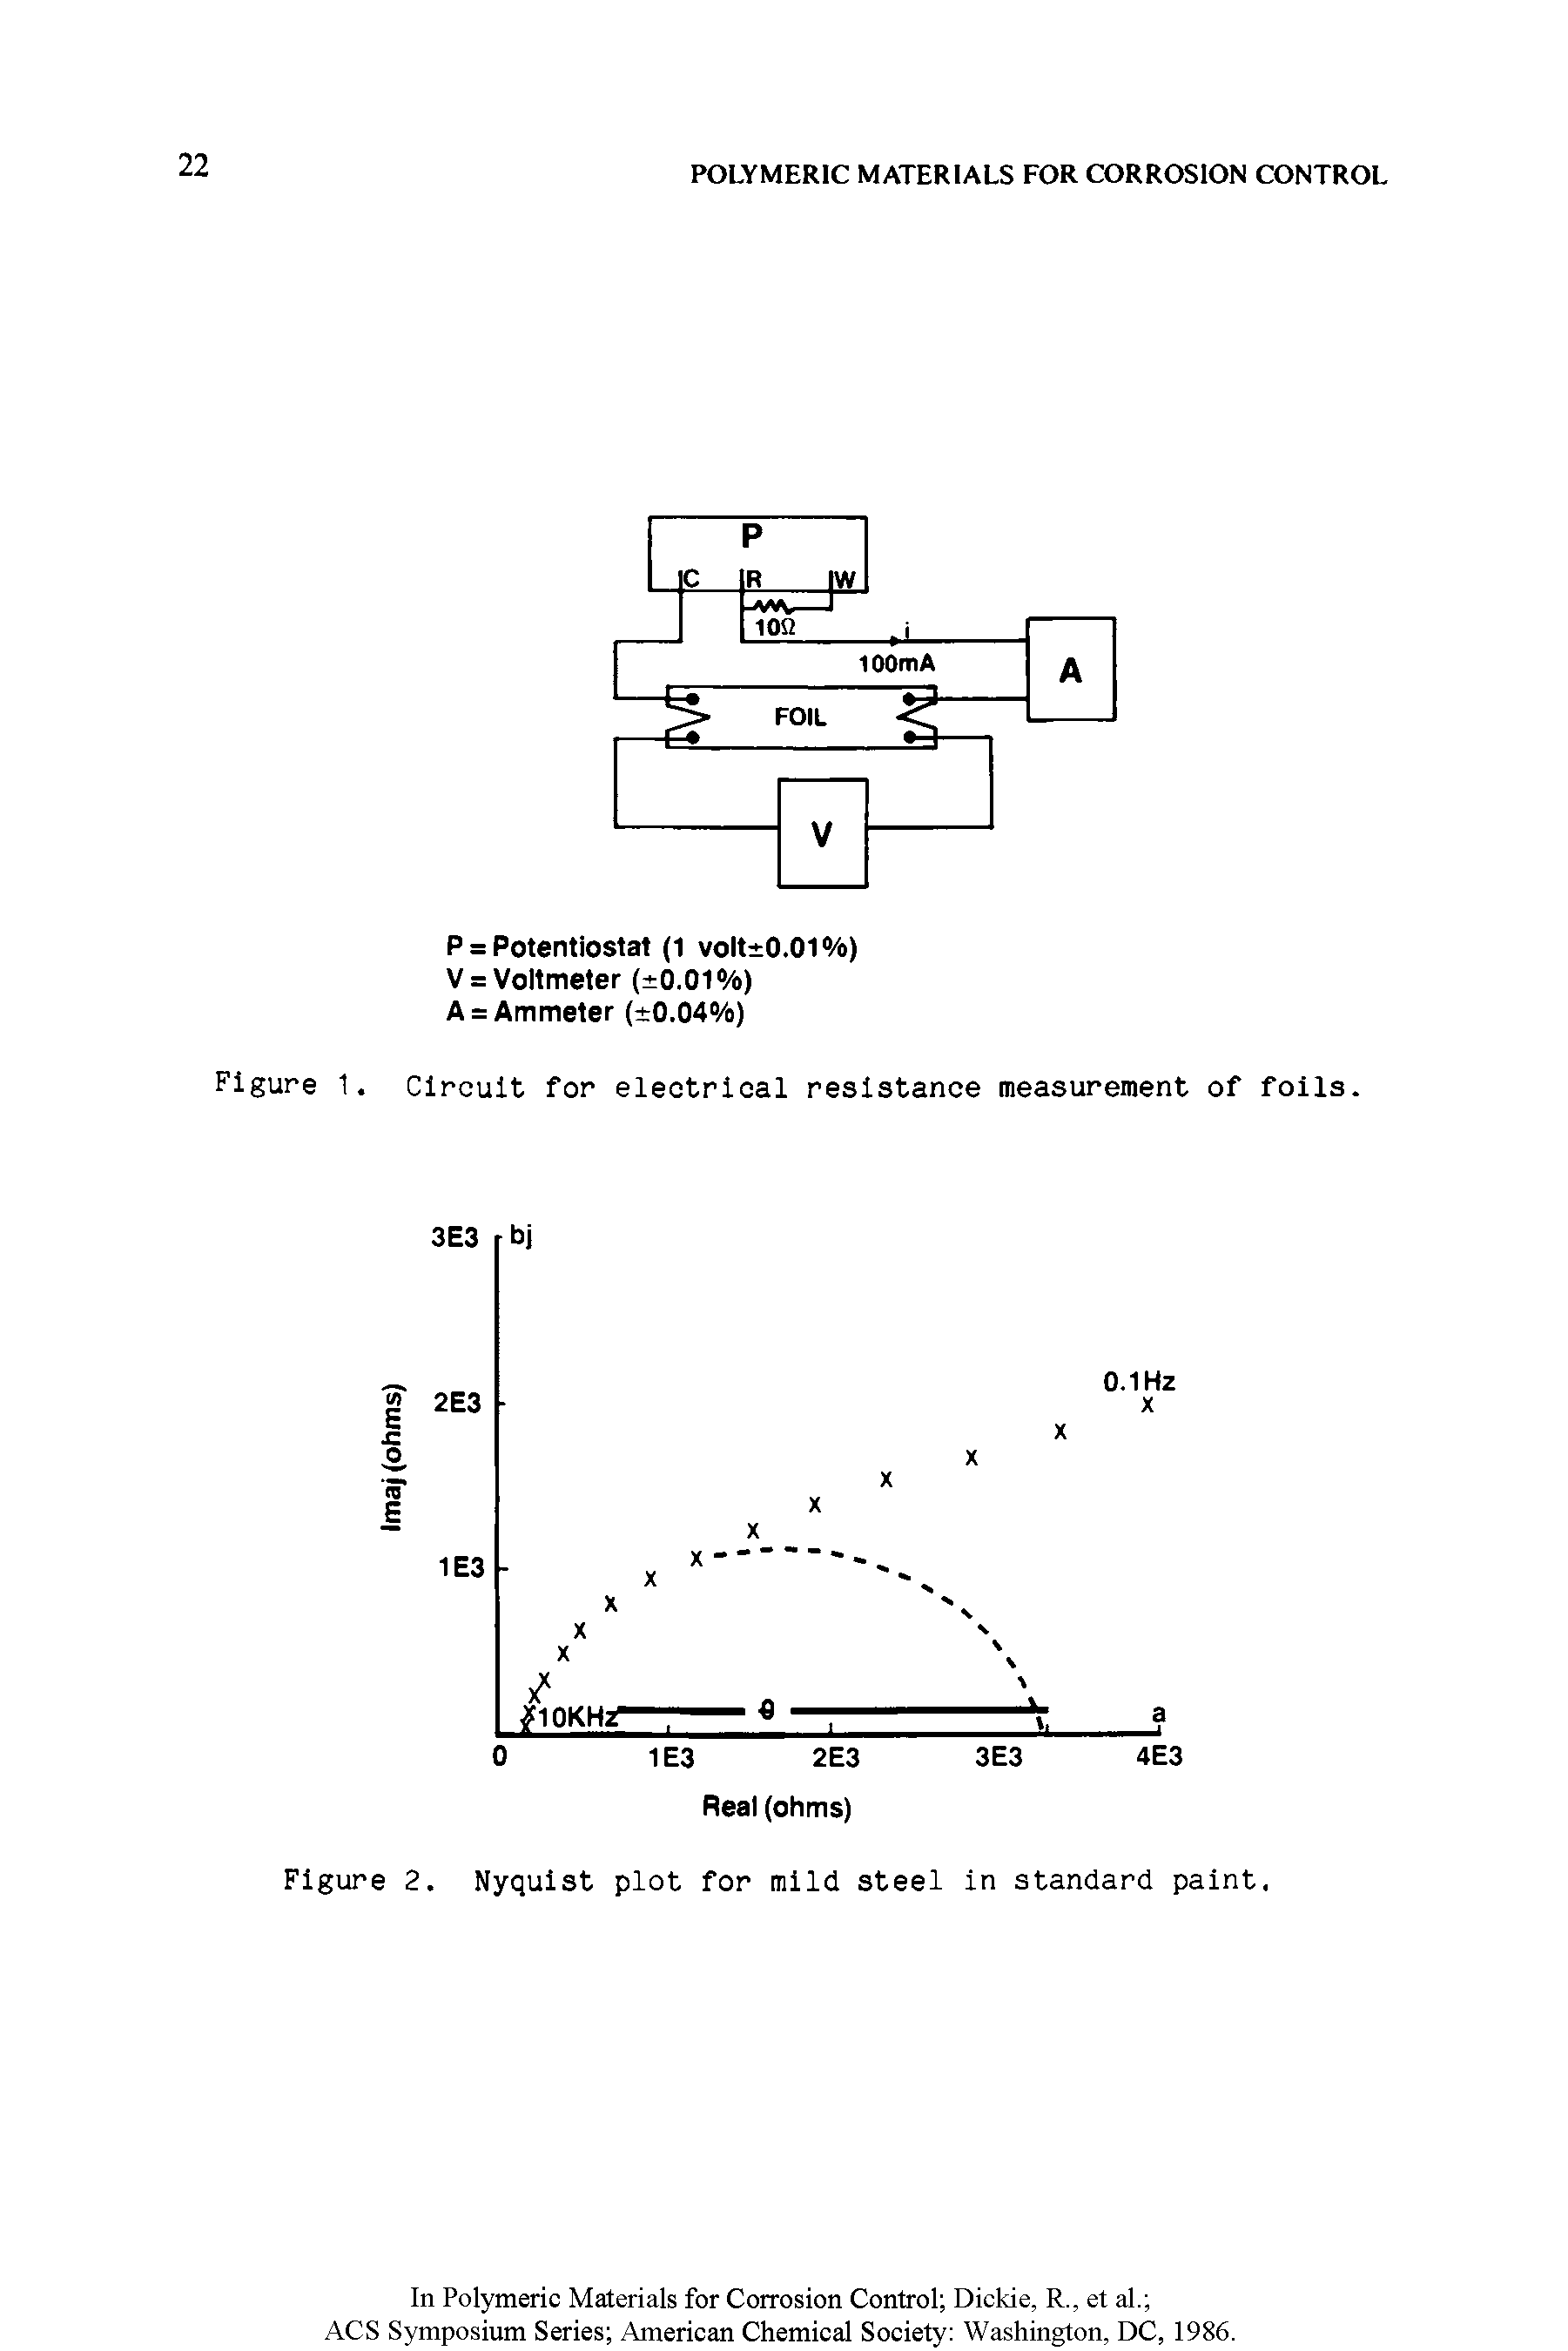 Figure 1. Circuit for electrical resistance measurement of foils.